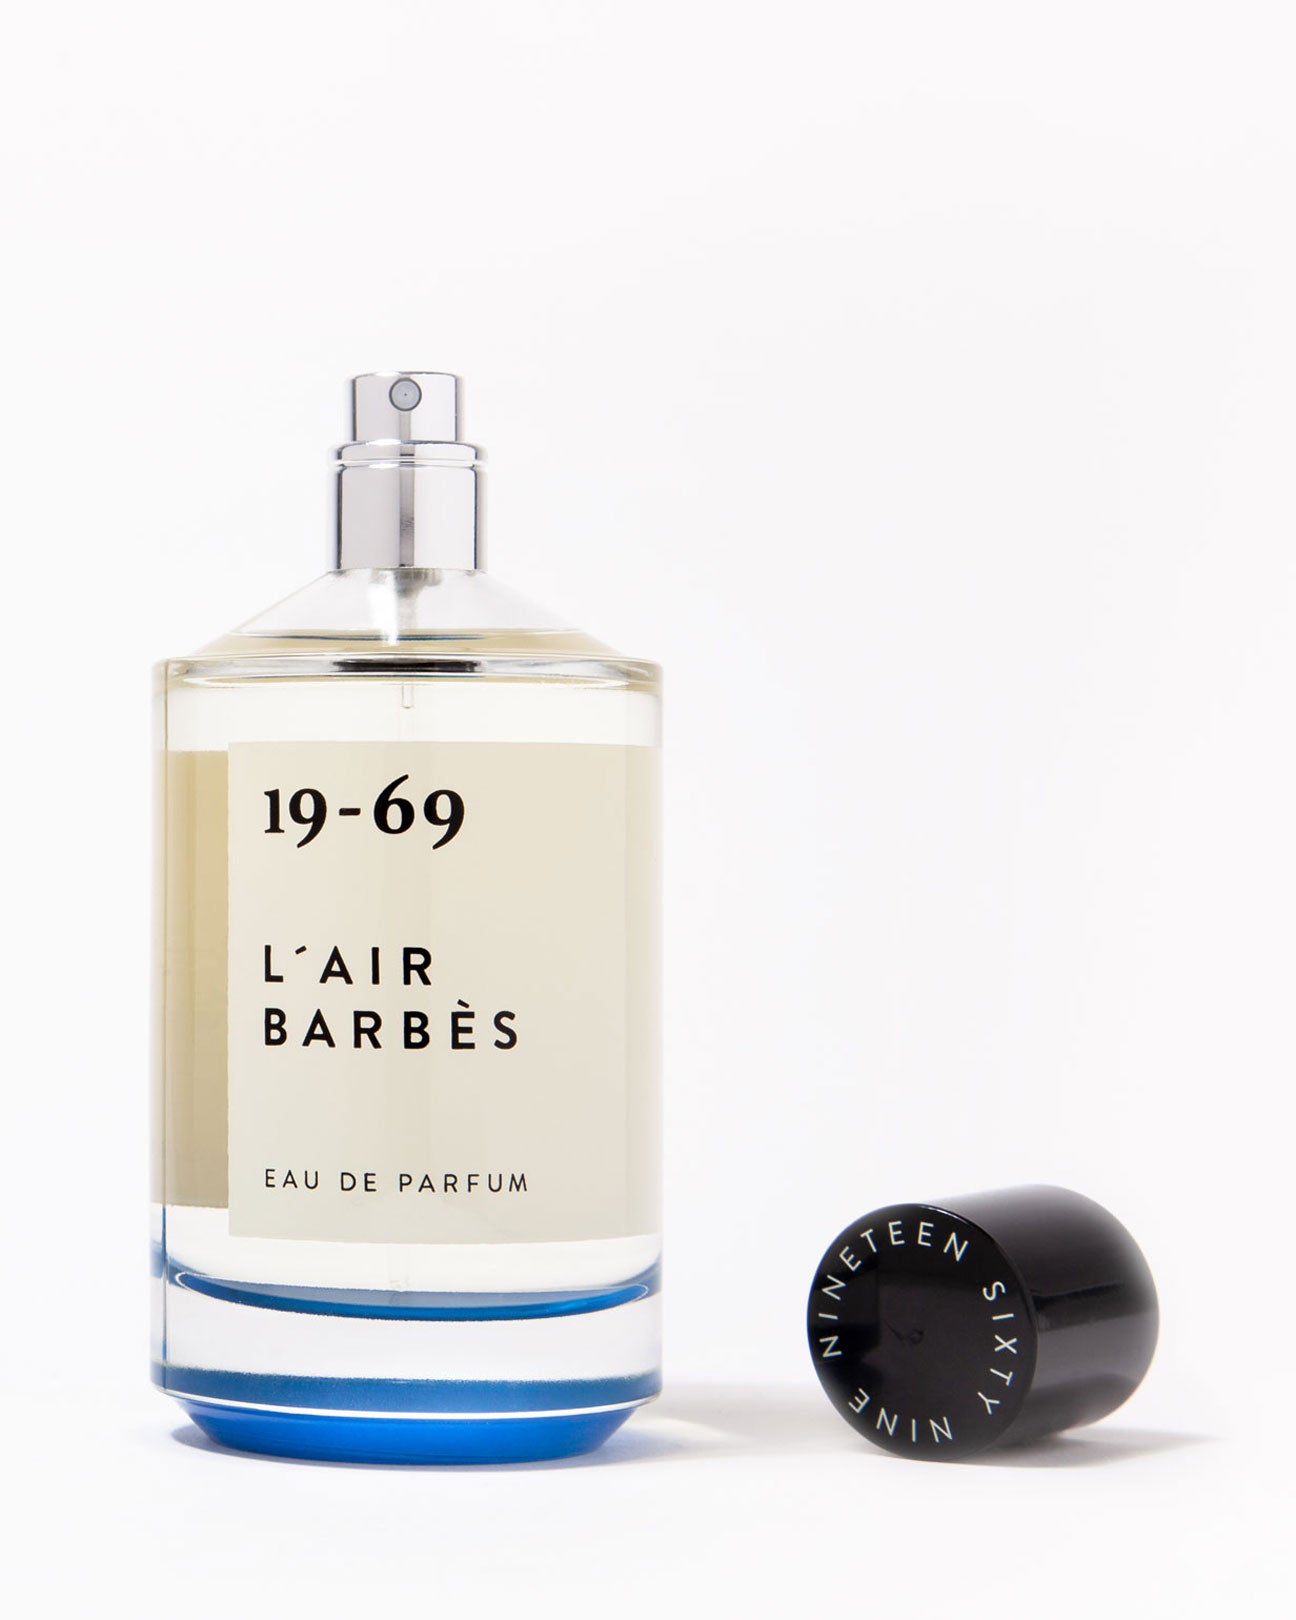 19-69 Eau De Parfum 30ml. in L'Air Barbès